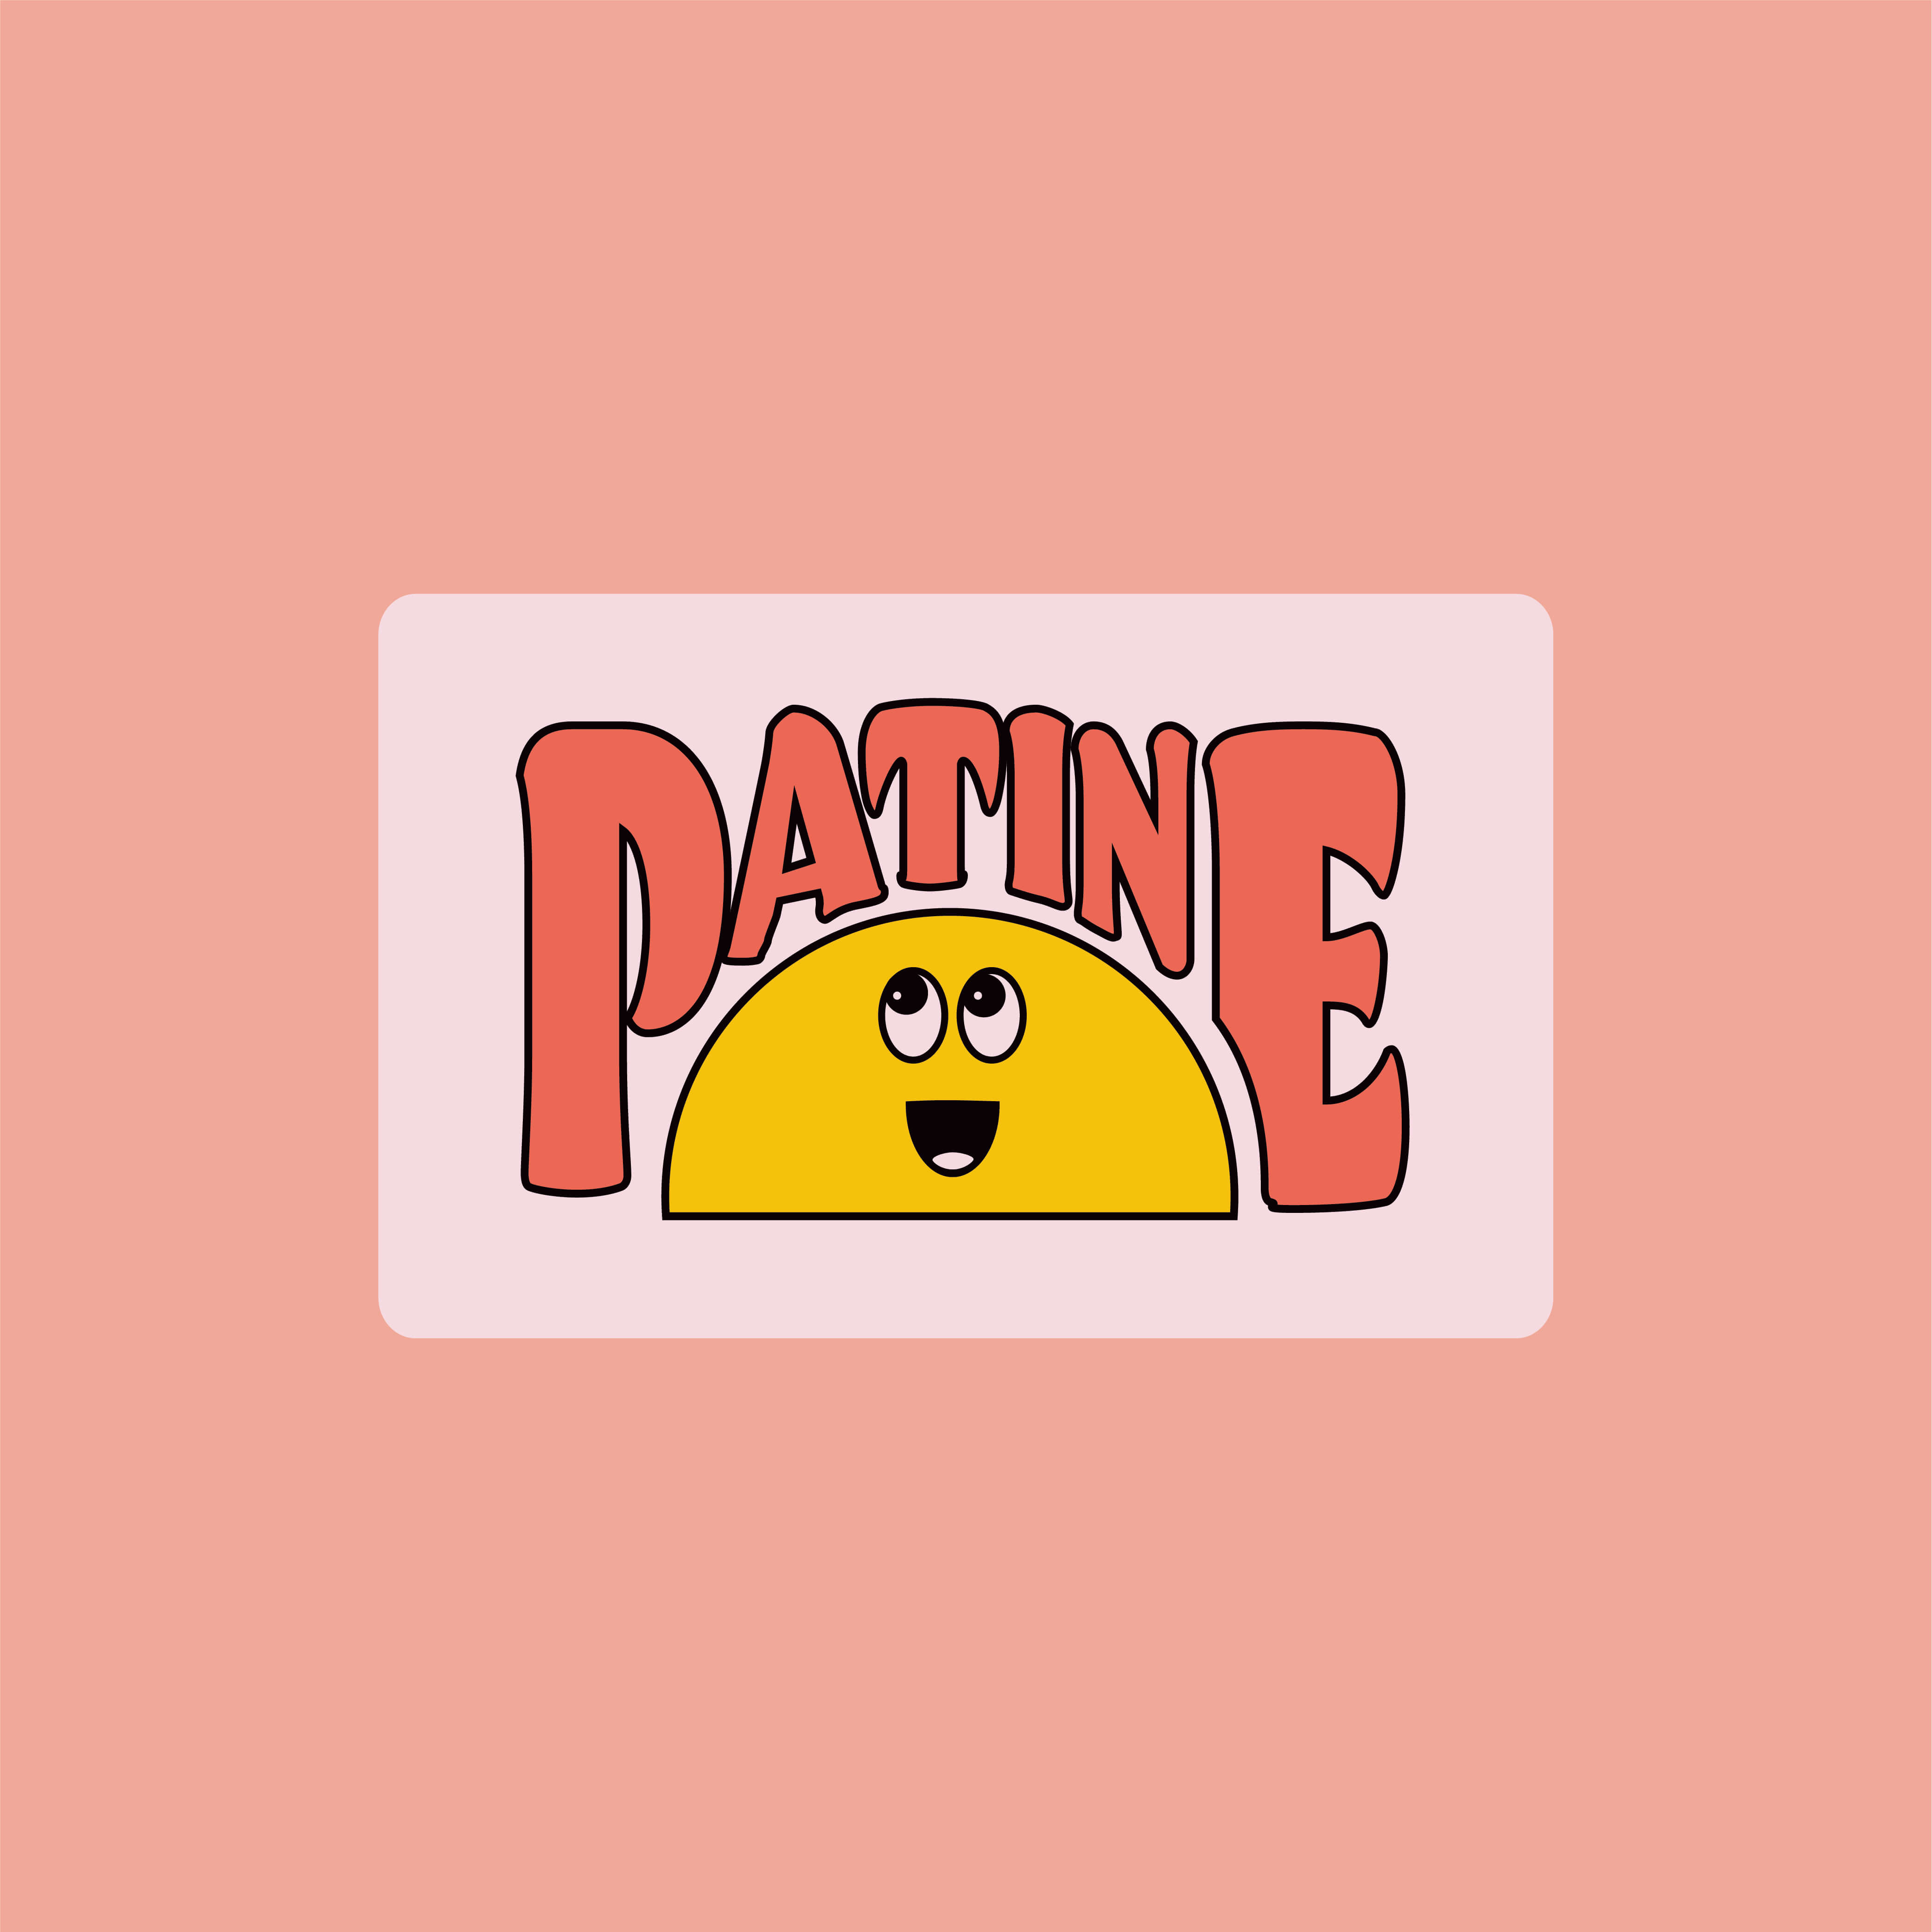 stickers-Patine-02